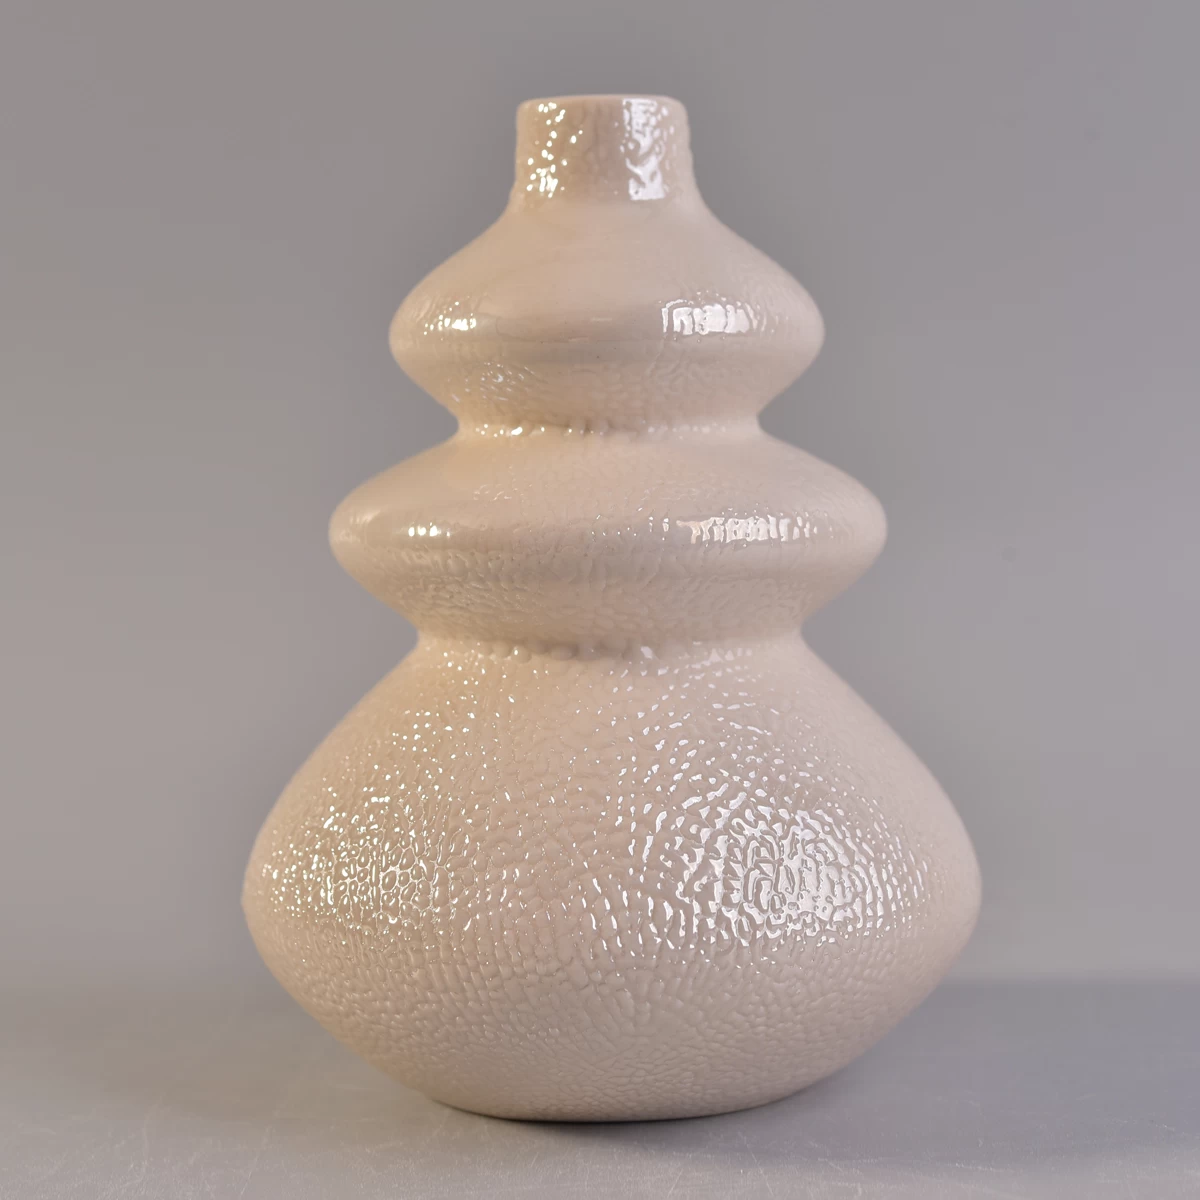 6 oz fl Pearl Glaze Plating Ceramic Oil Container Diffuser Bottle